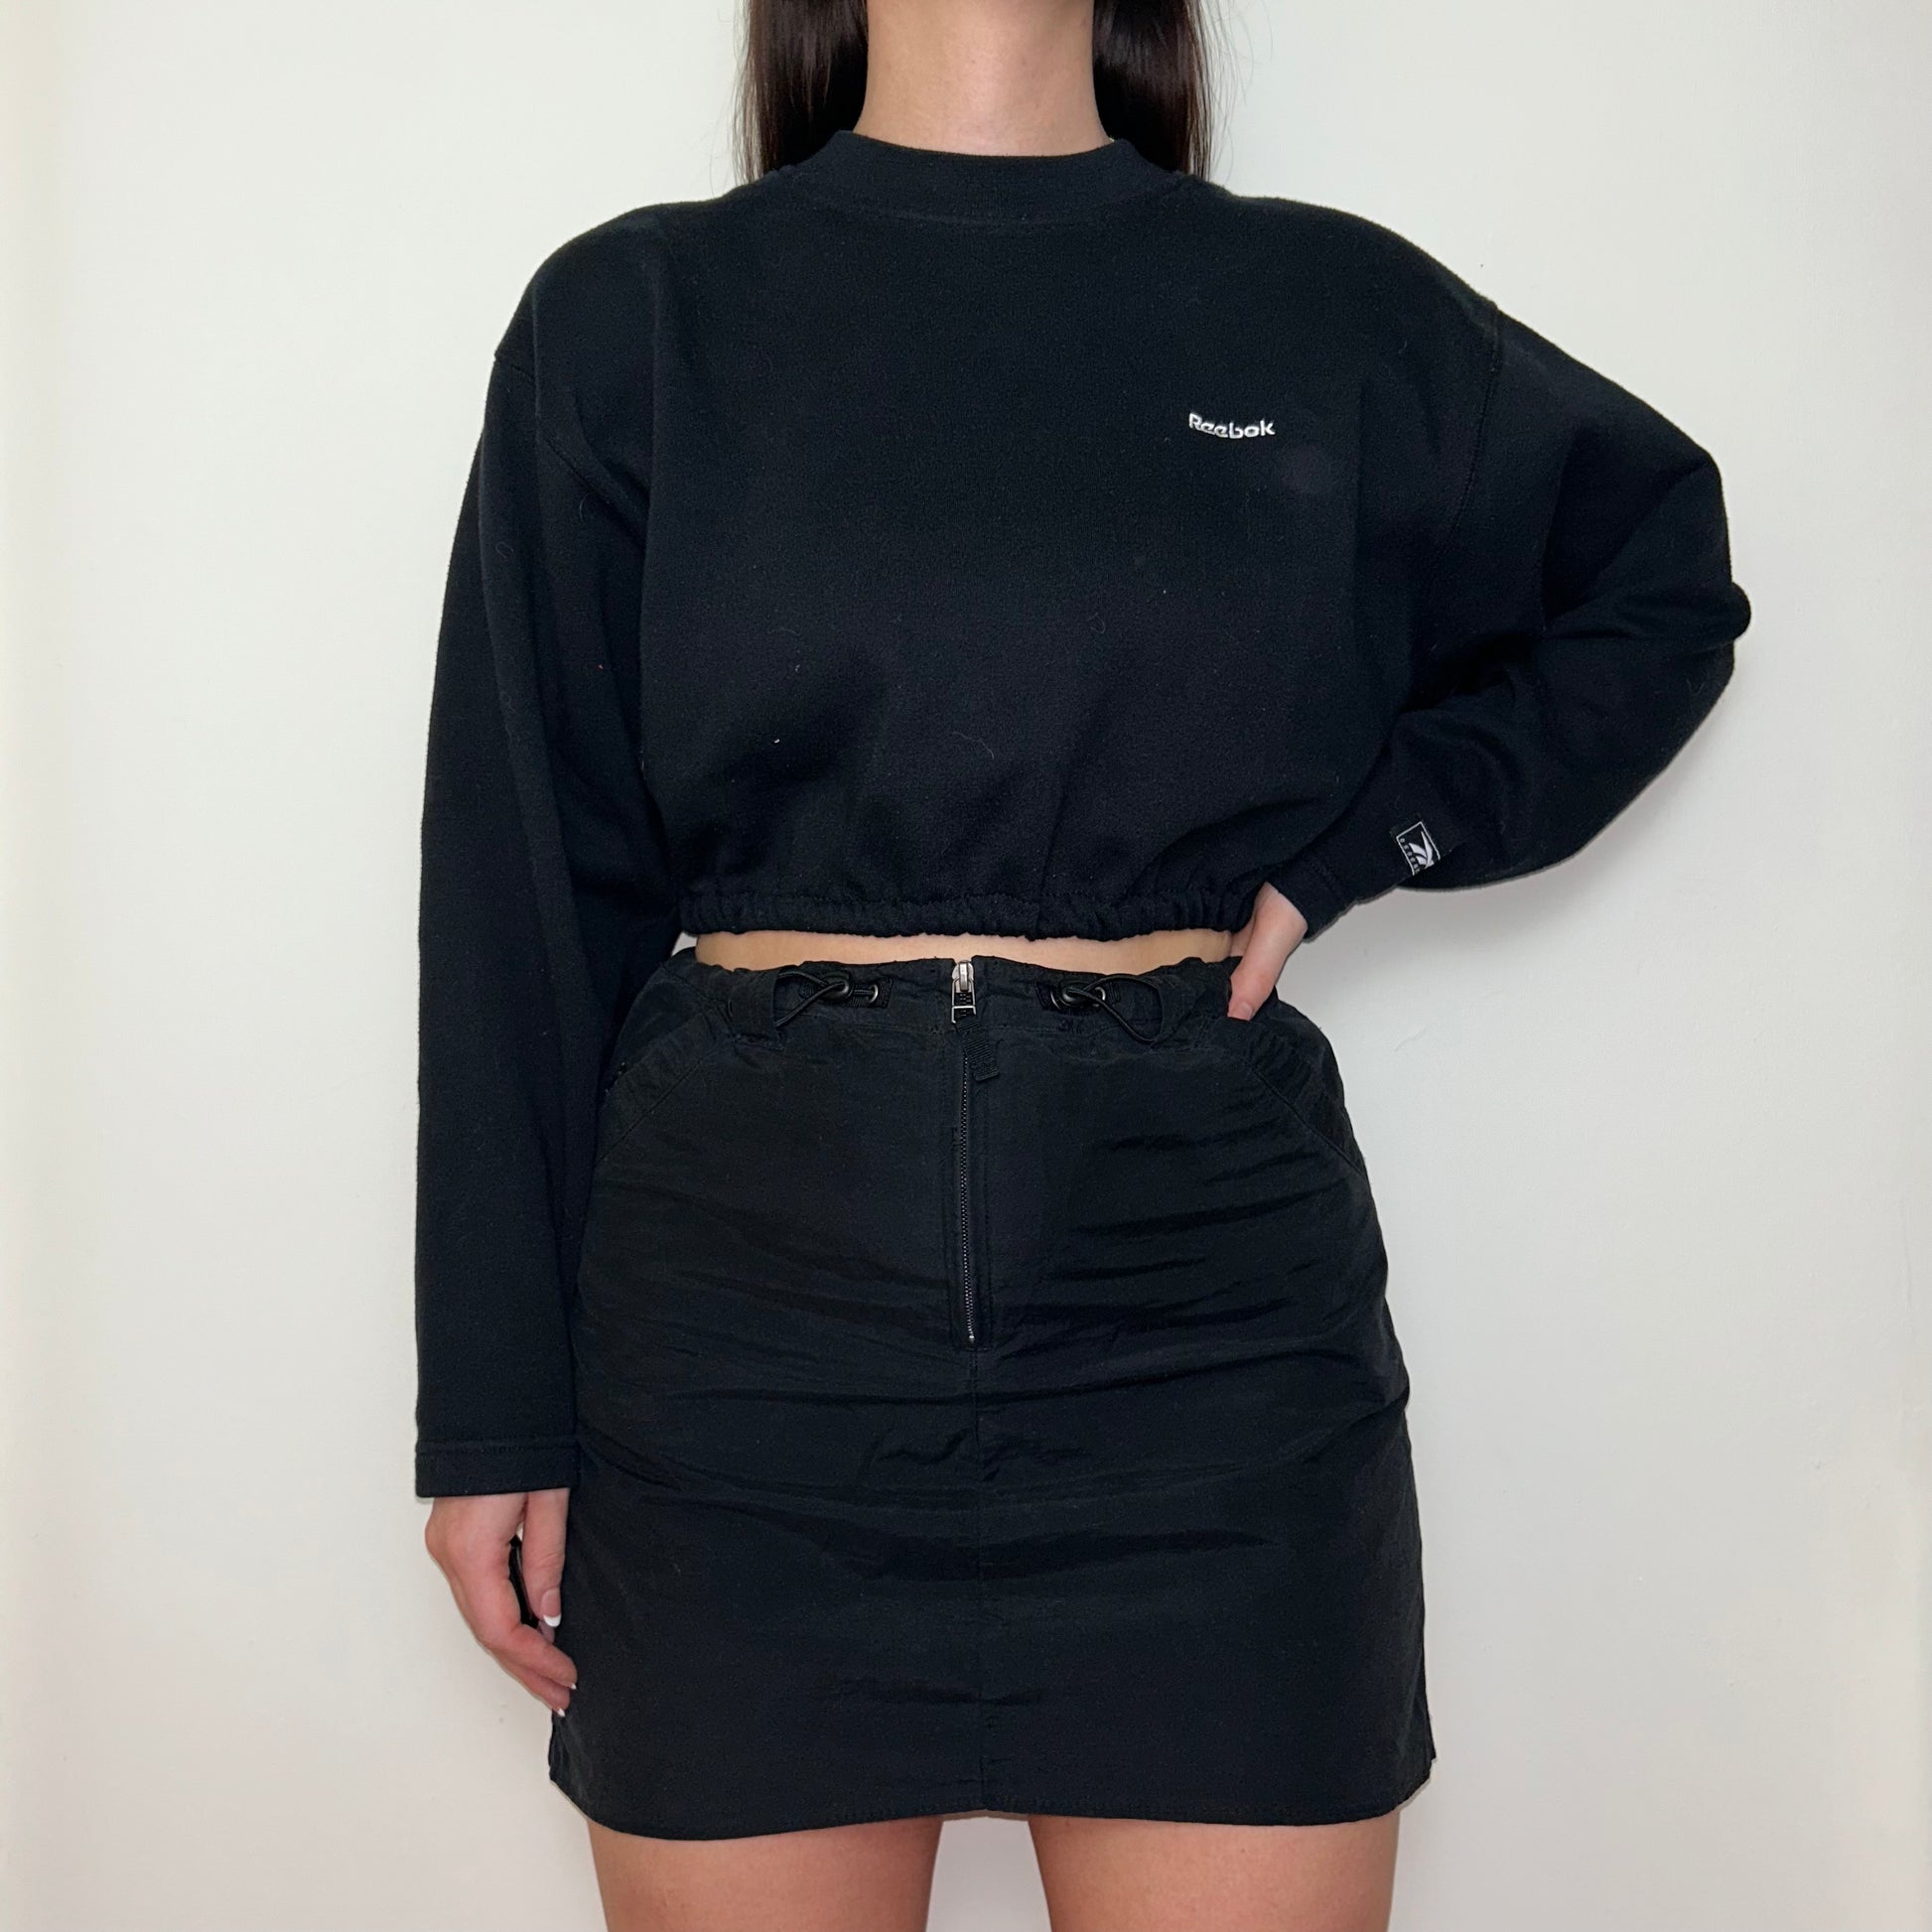 black cropped sweatshirt with white reebok logo shown on a model wearing a black mini skirt